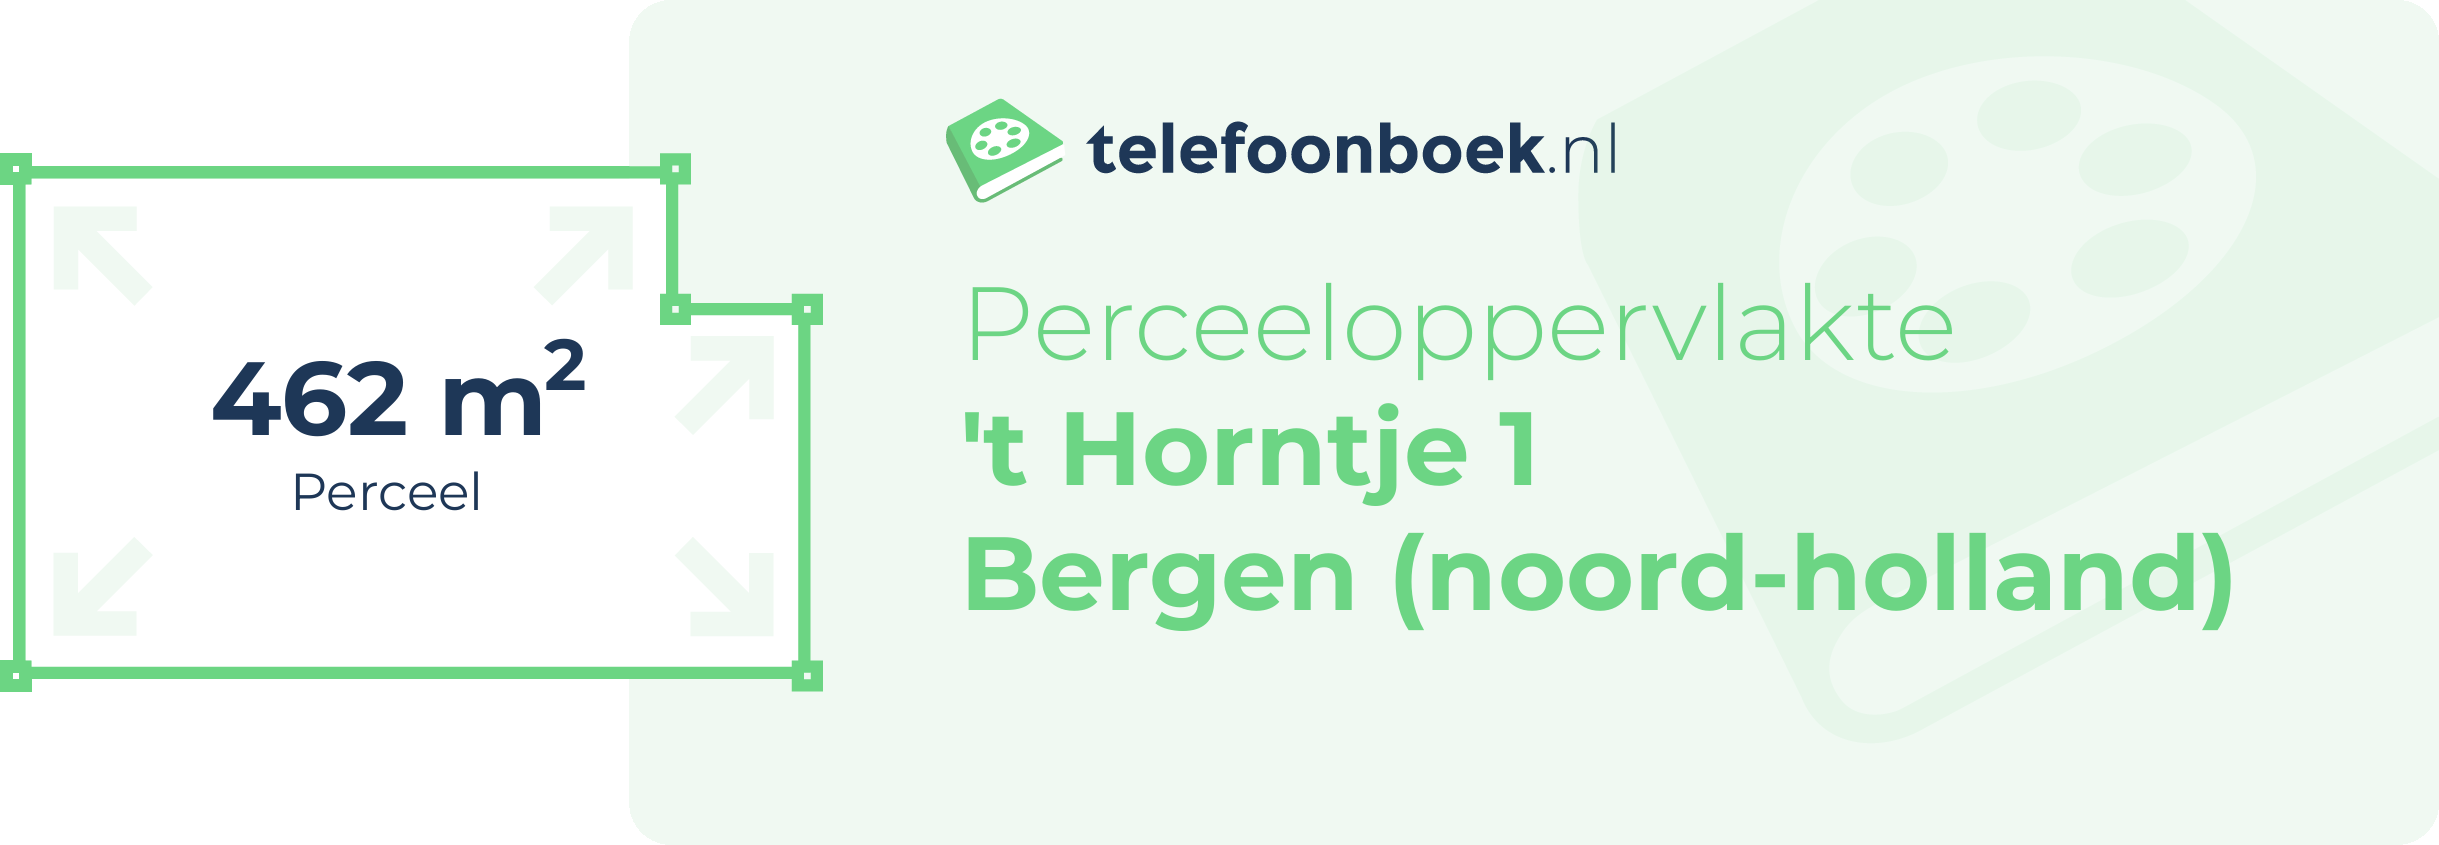 Perceeloppervlakte 't Horntje 1 Bergen (Noord-Holland)